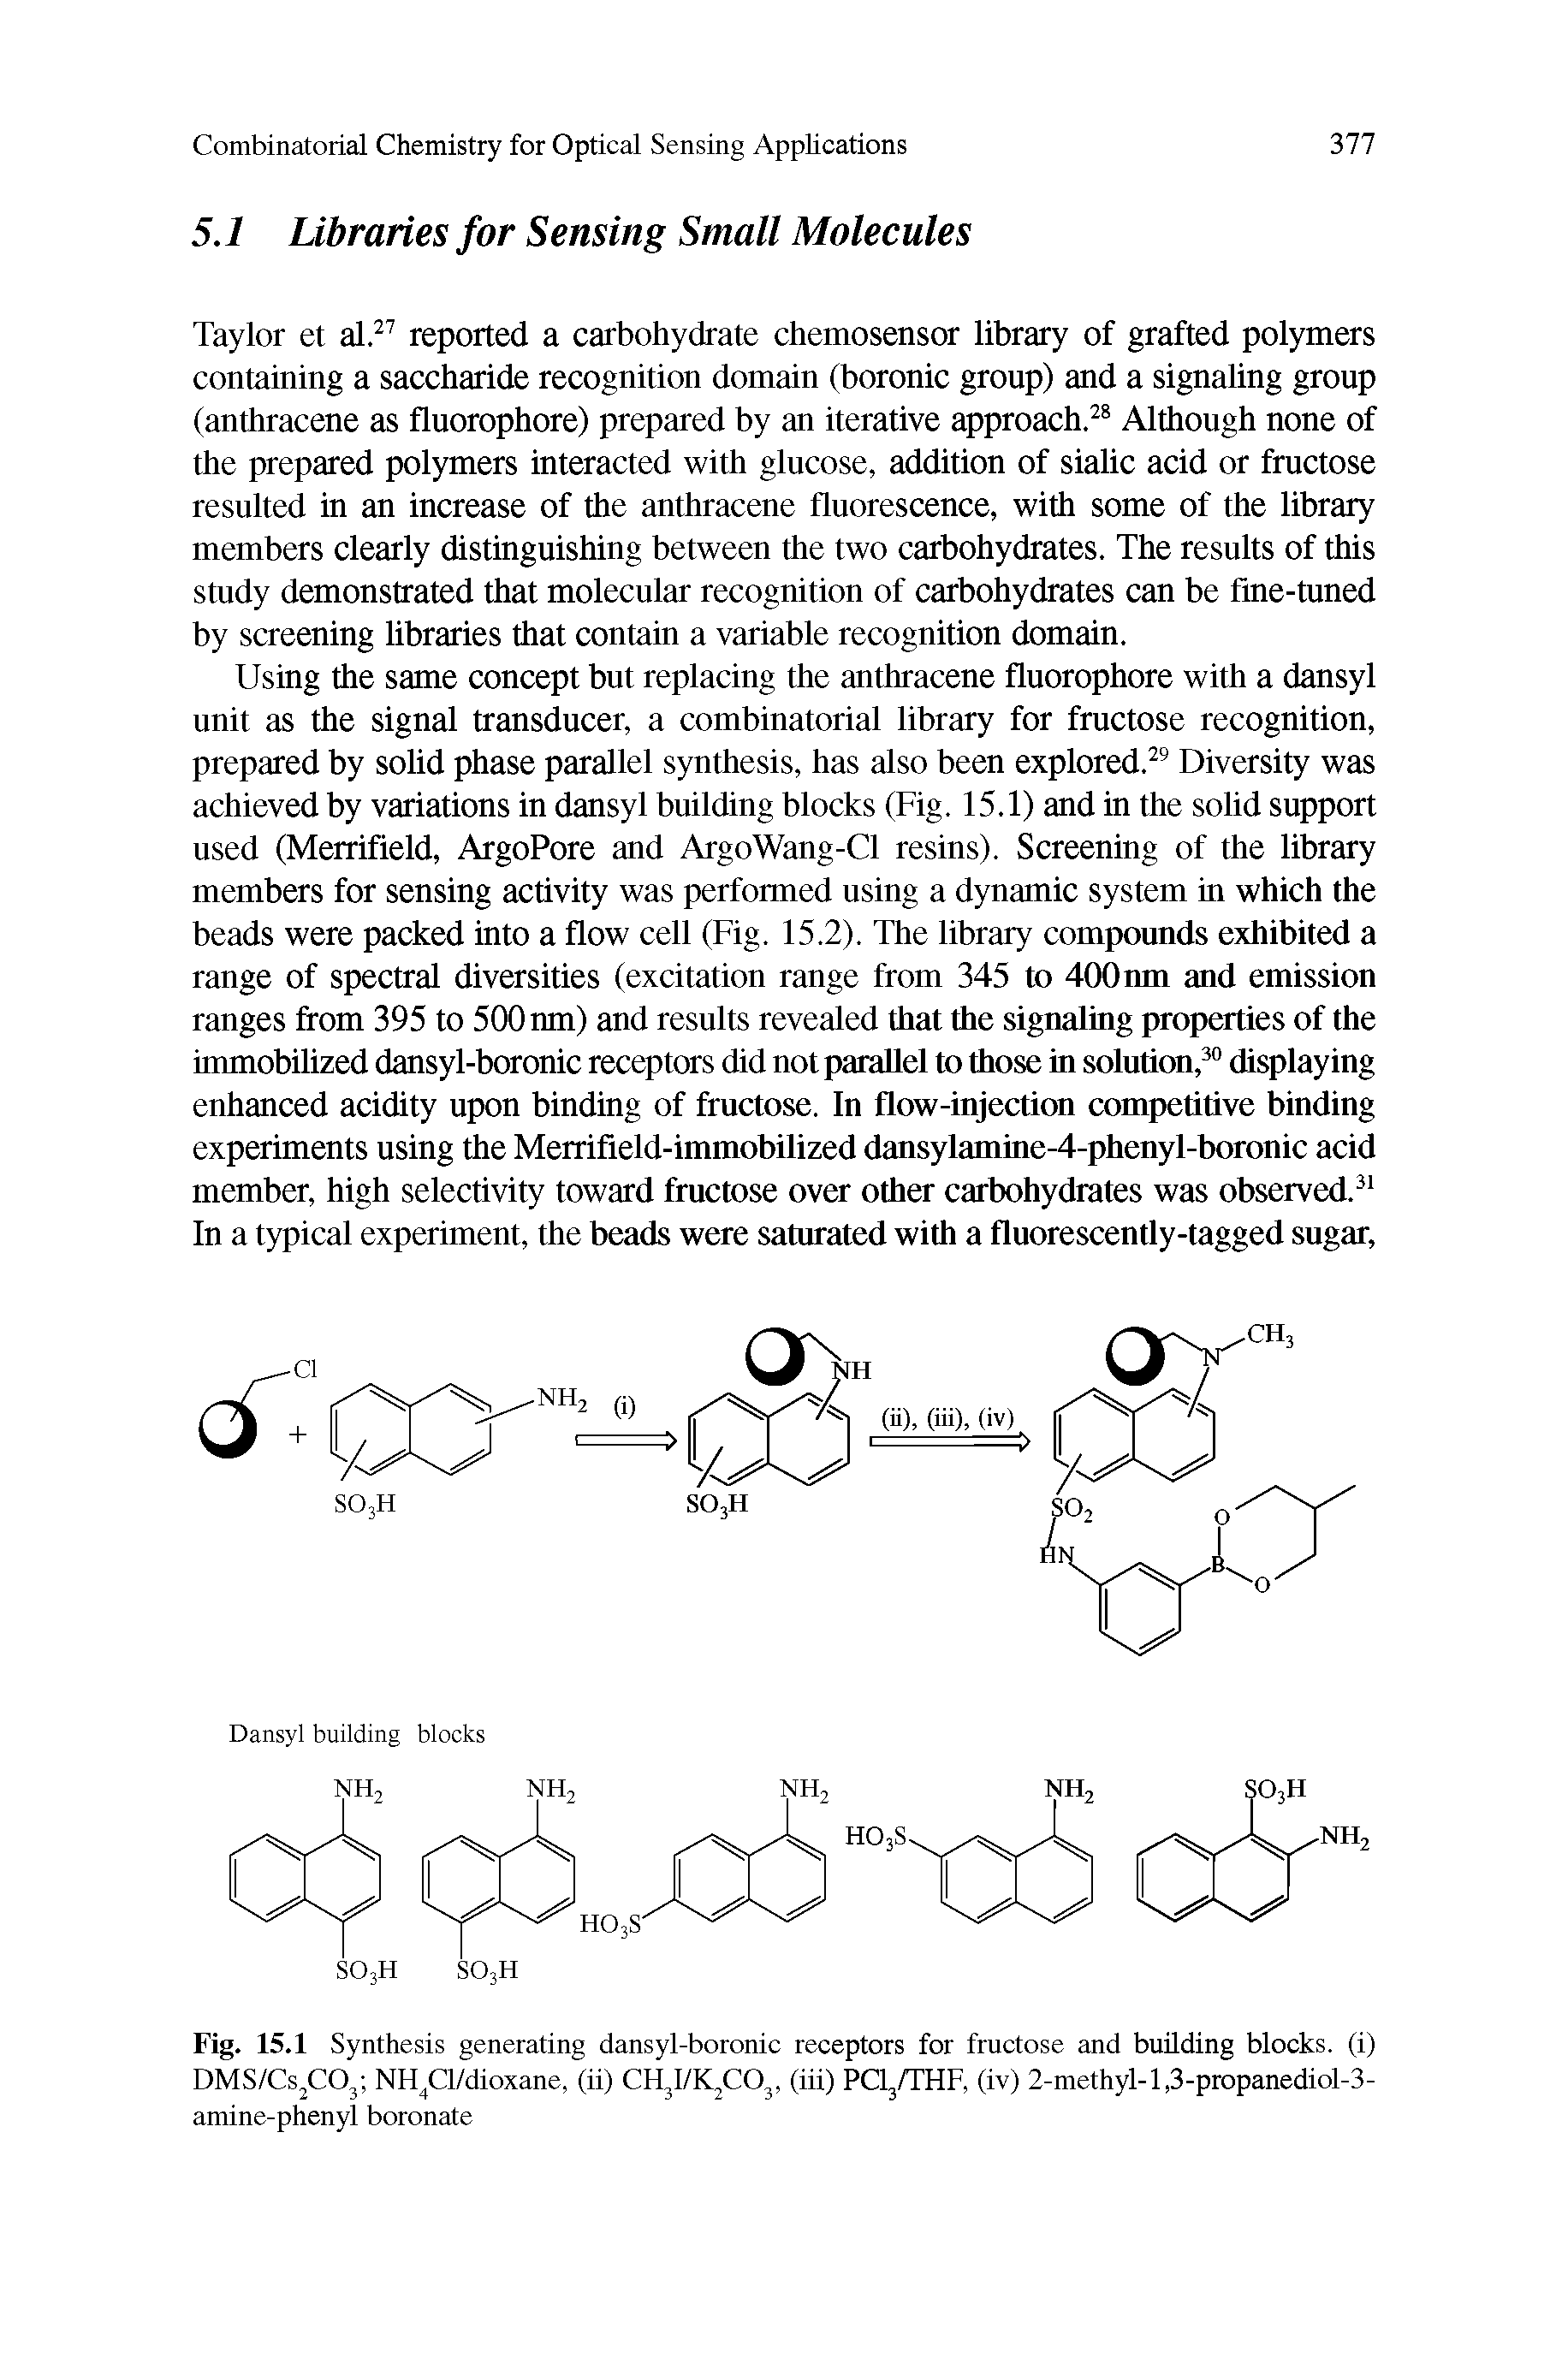 Fig. 15.1 Synthesis generating dansyl-boronic receptors for fructose and building blocks, (i) DMS/Cs2C03 NH4Cl/dioxane, (ii) CH3I/K2C03, (iii) PC13/THF, (iv) 2-methyl-l,3-propanediol-3-amine-phenyl boronate...